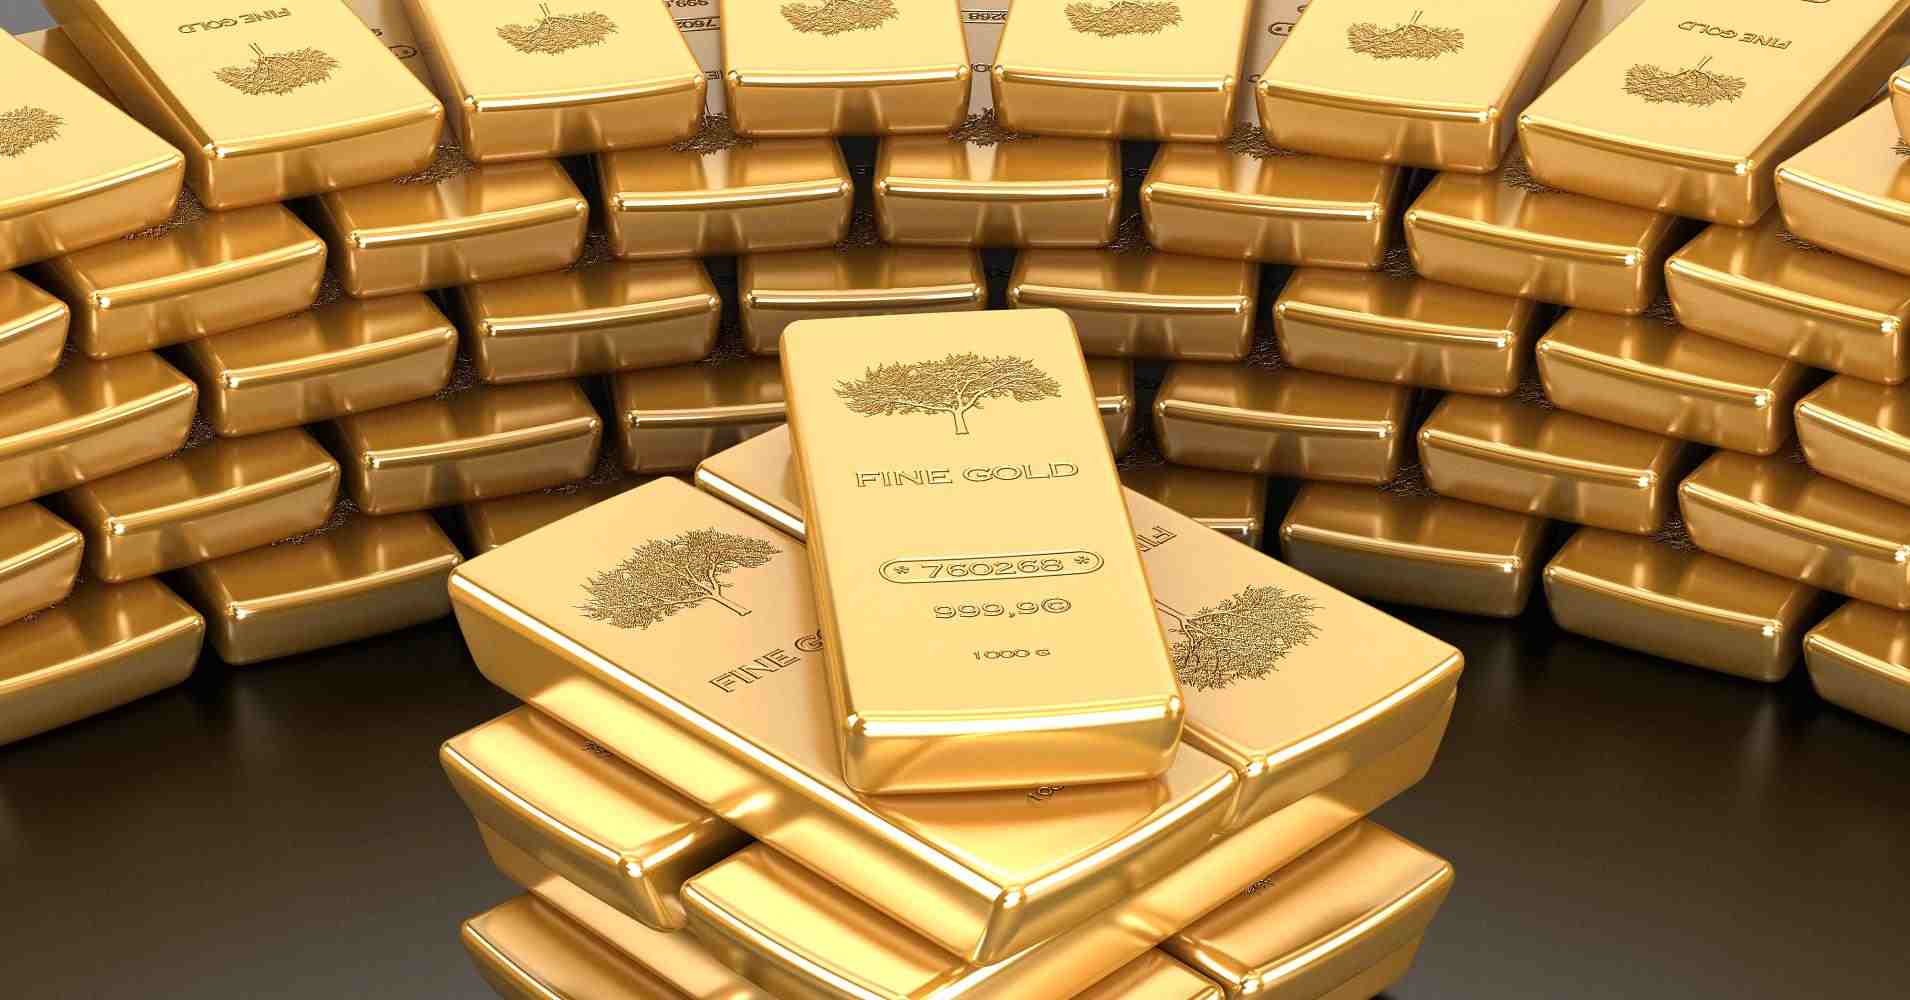 PRECIOUS-Gold flat as traders await U.S. inflation data, Fed meet next week